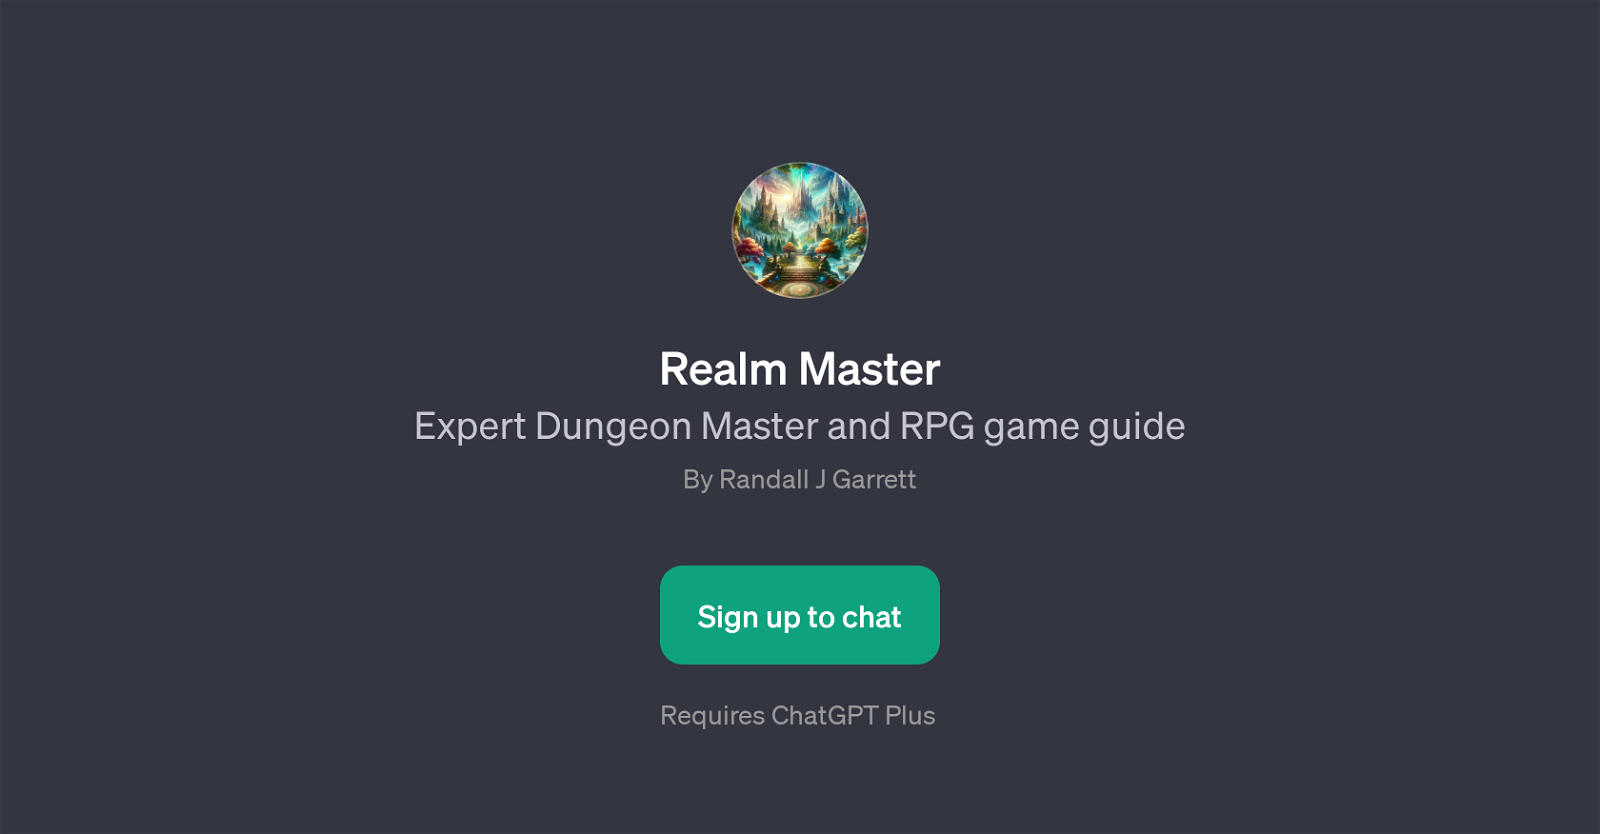 Realm Master website